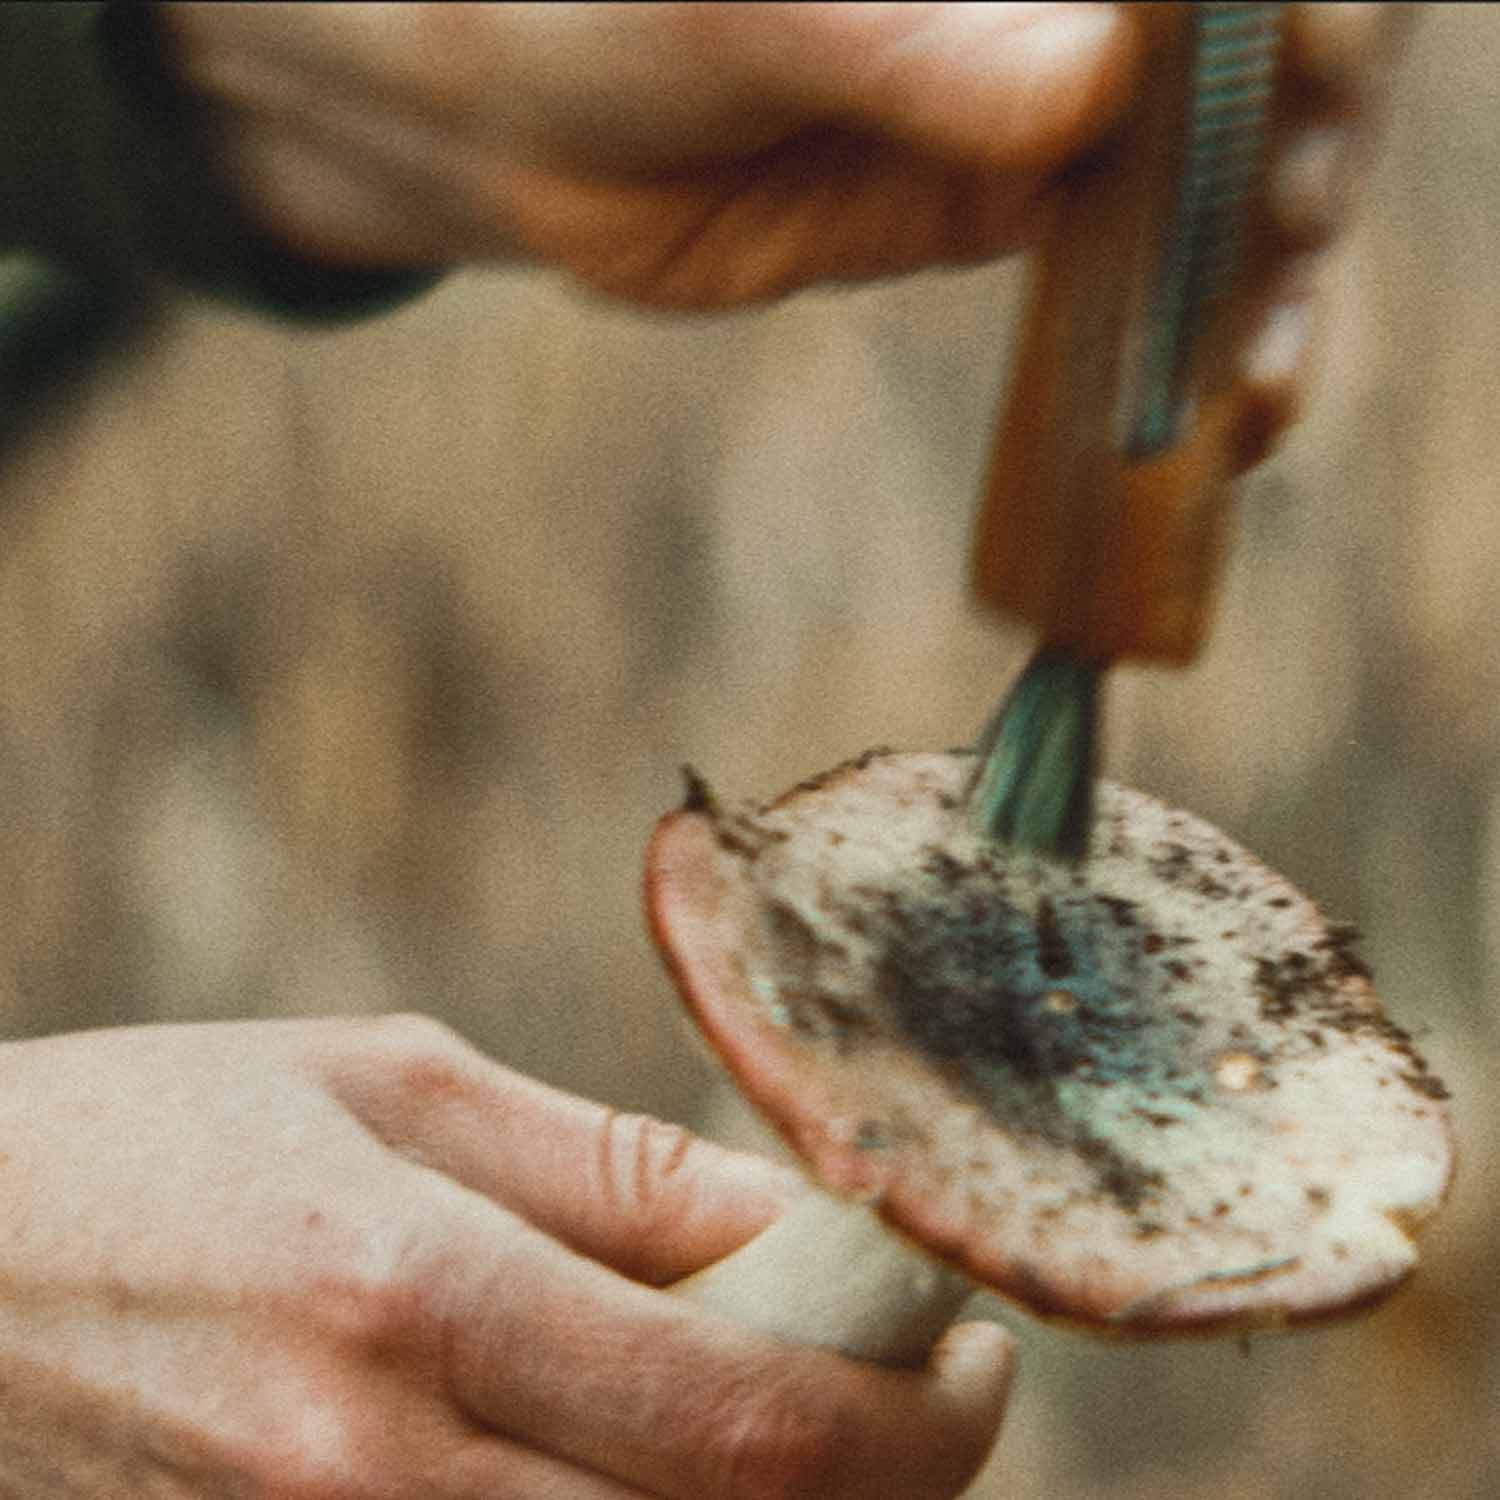 Two hands brush dirt off of a mushroom cap